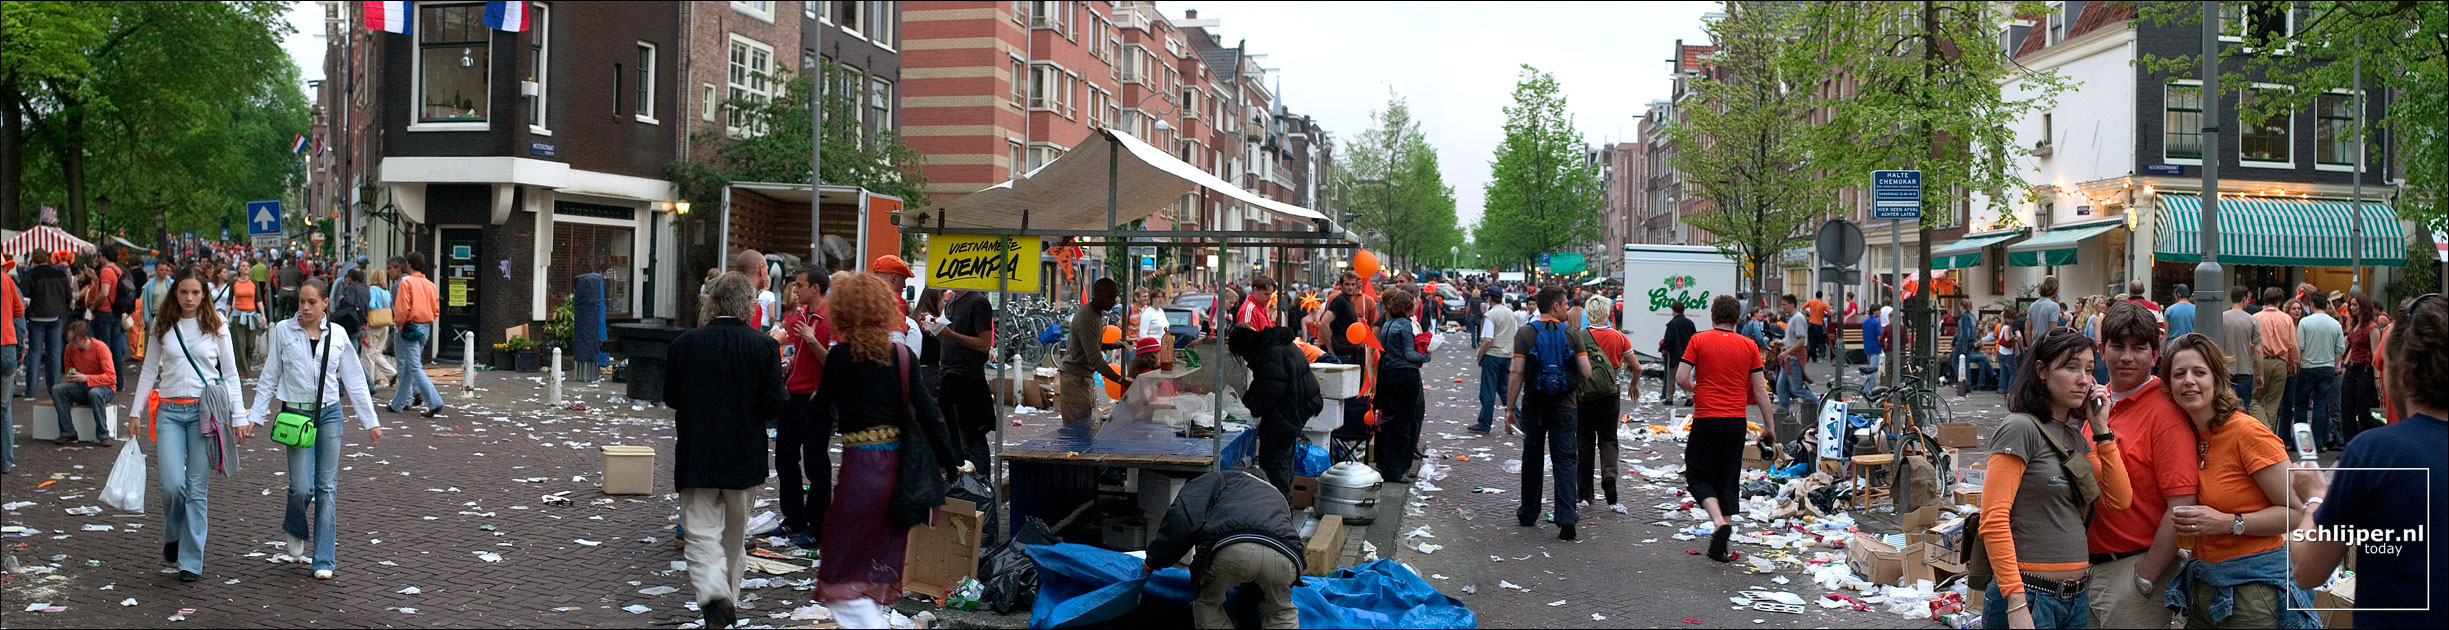 Nederland, Amsterdam, 30 april 2004